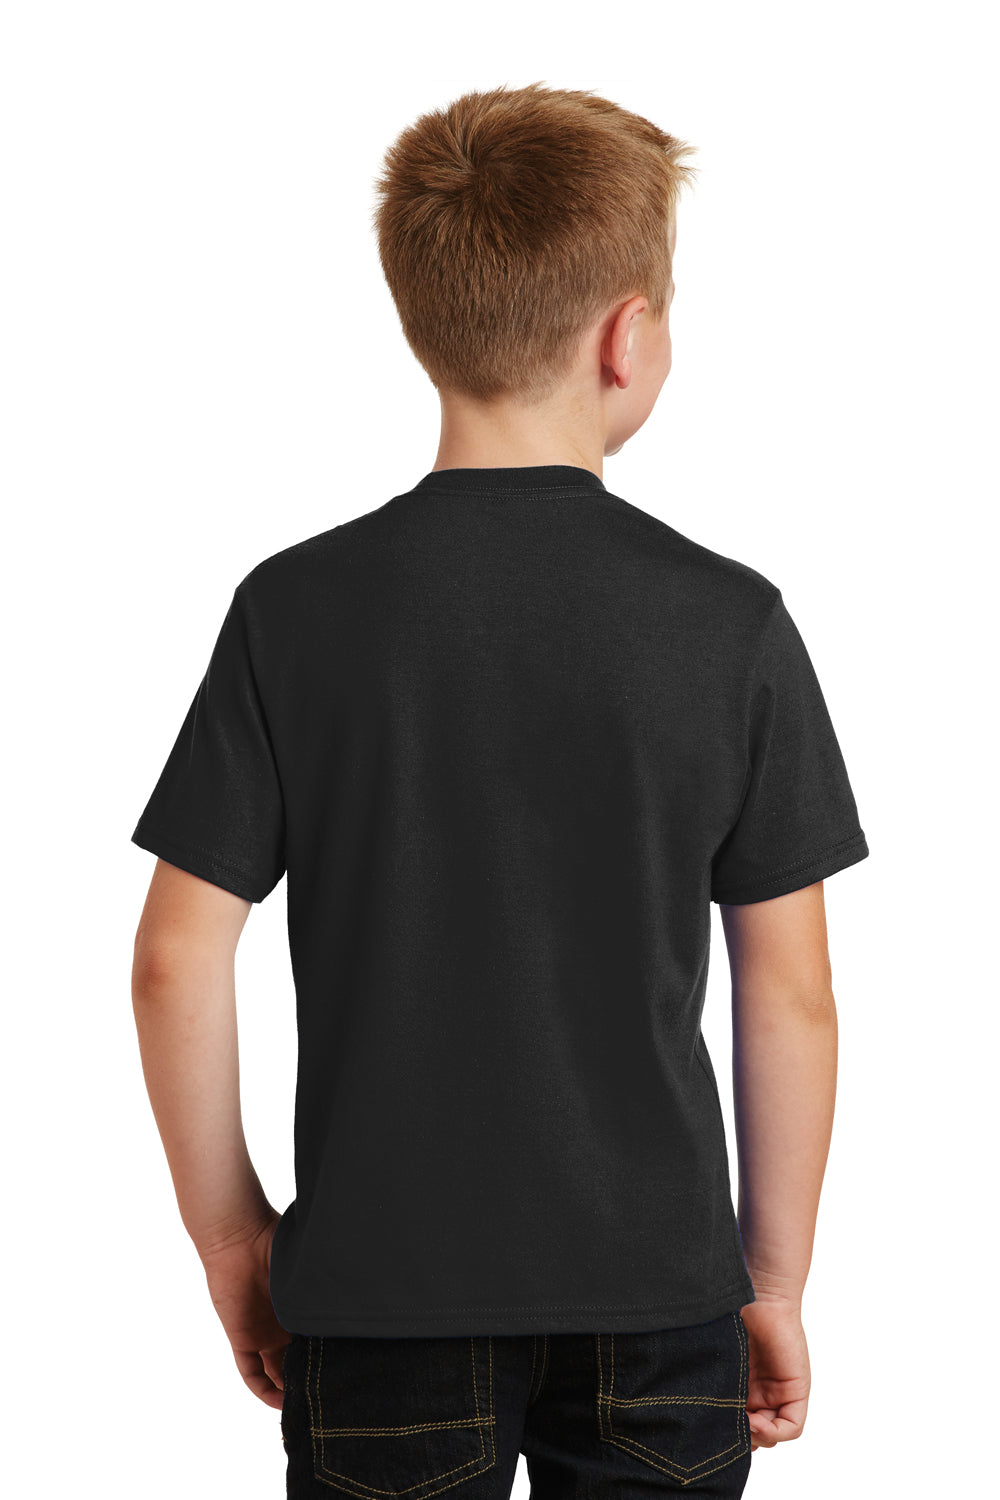 Port & Company PC450Y Youth Fan Favorite Short Sleeve Crewneck T-Shirt Black Back